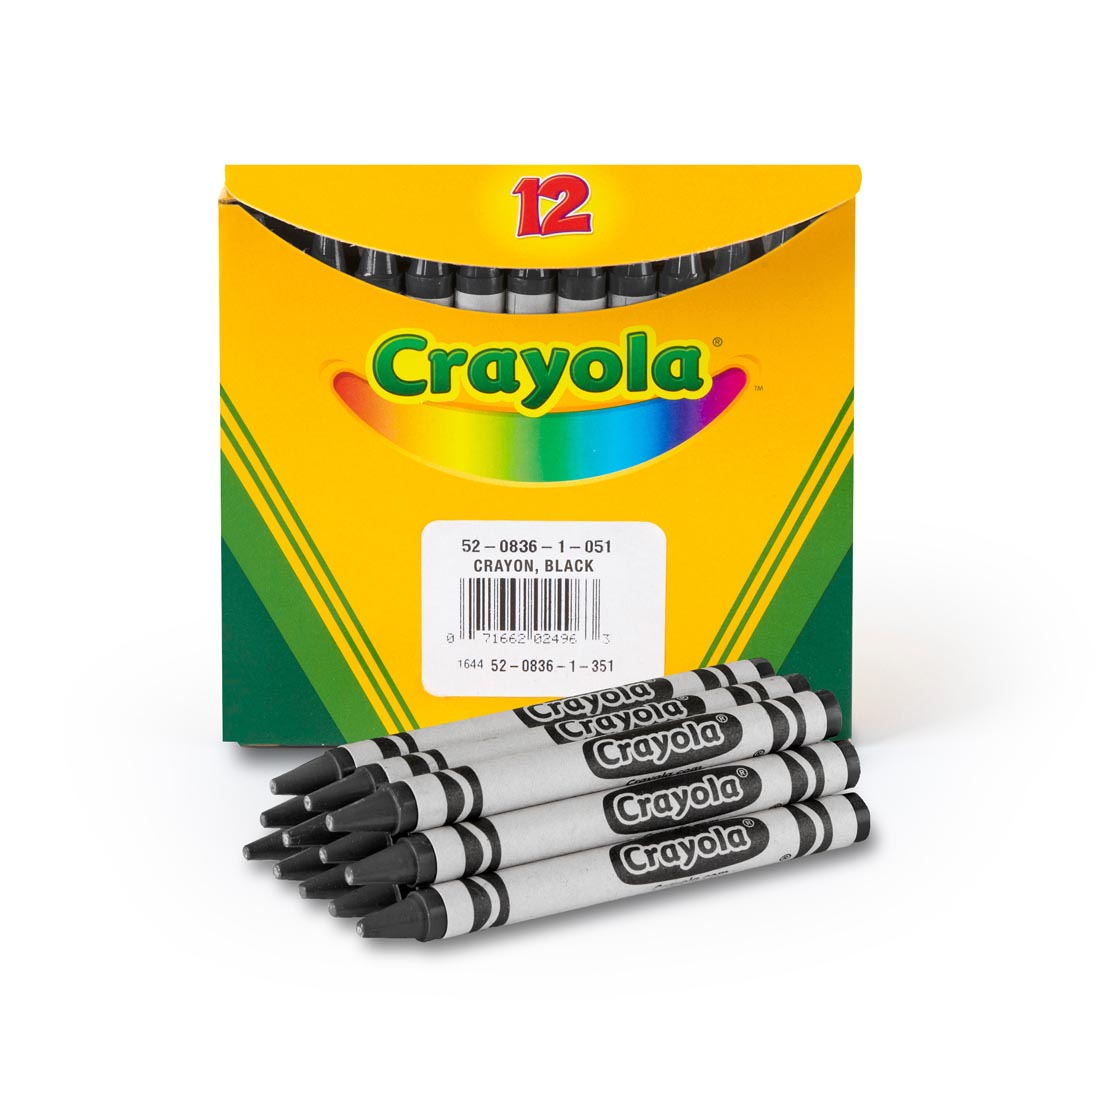 Box of Crayola Regular Crayon Refills with 12 Black Crayons